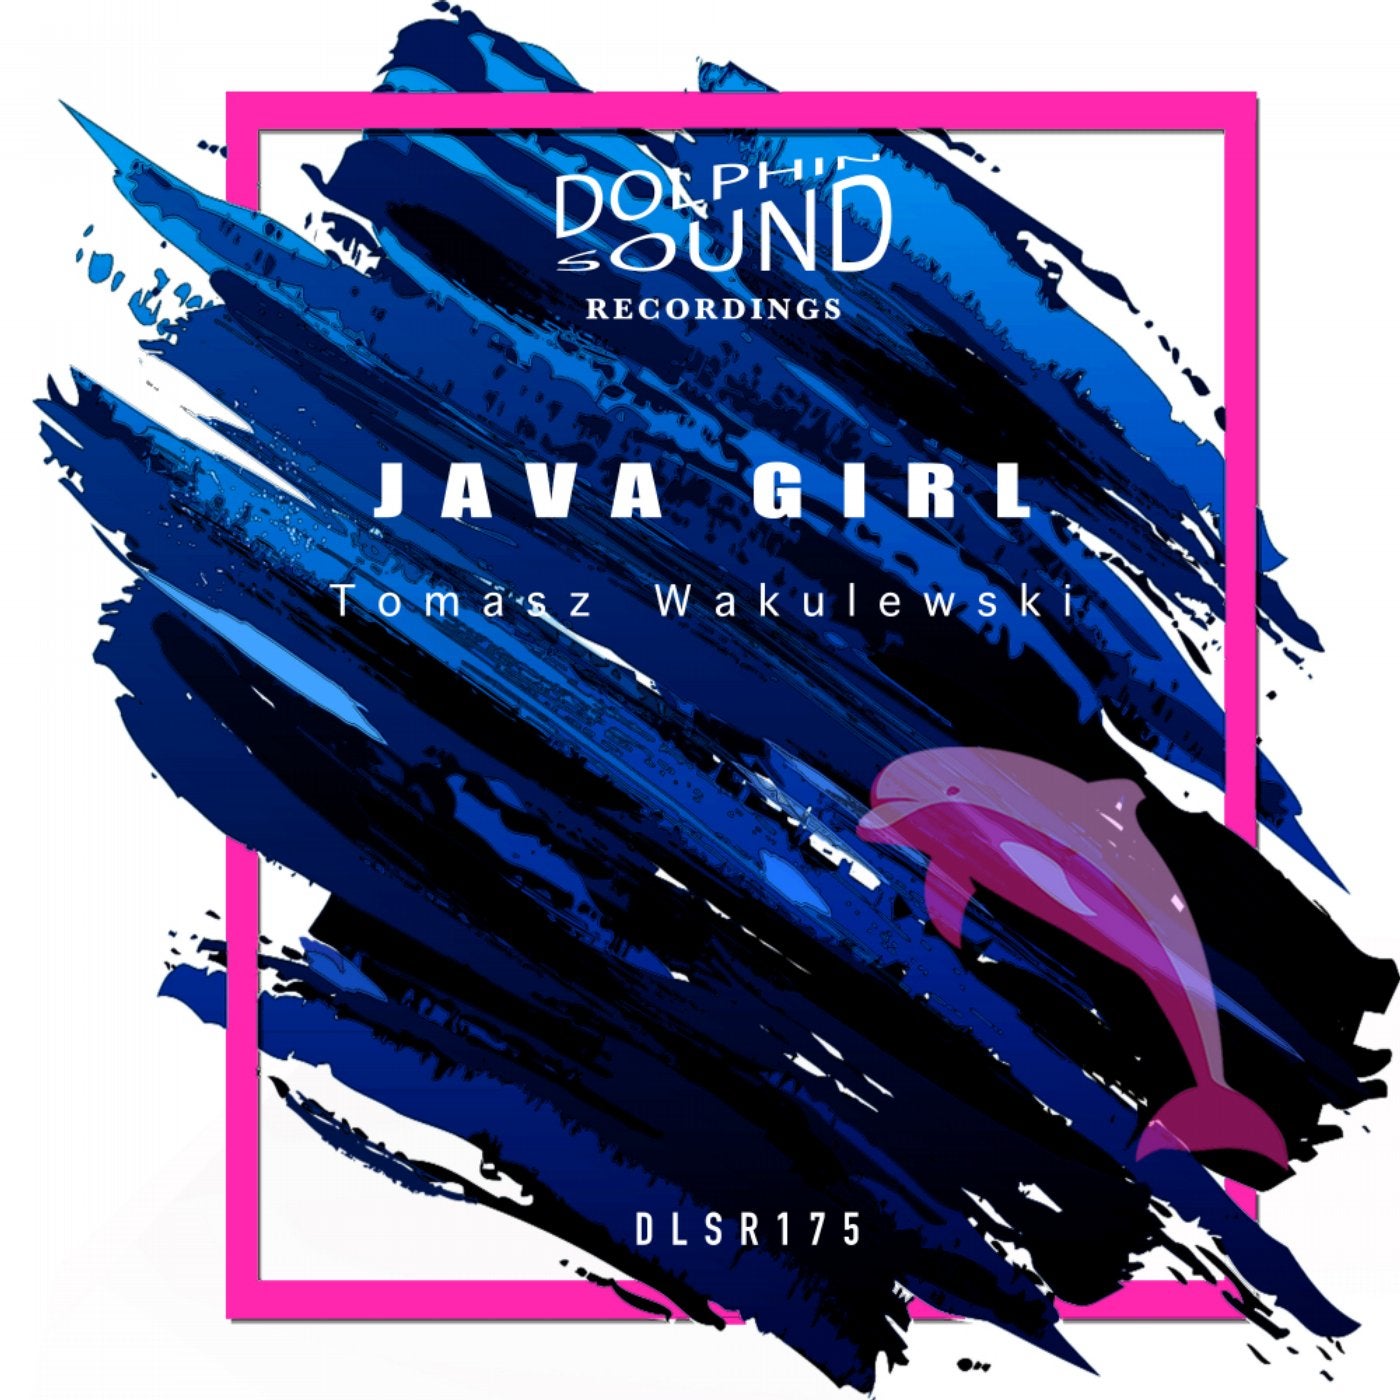 Java Girl